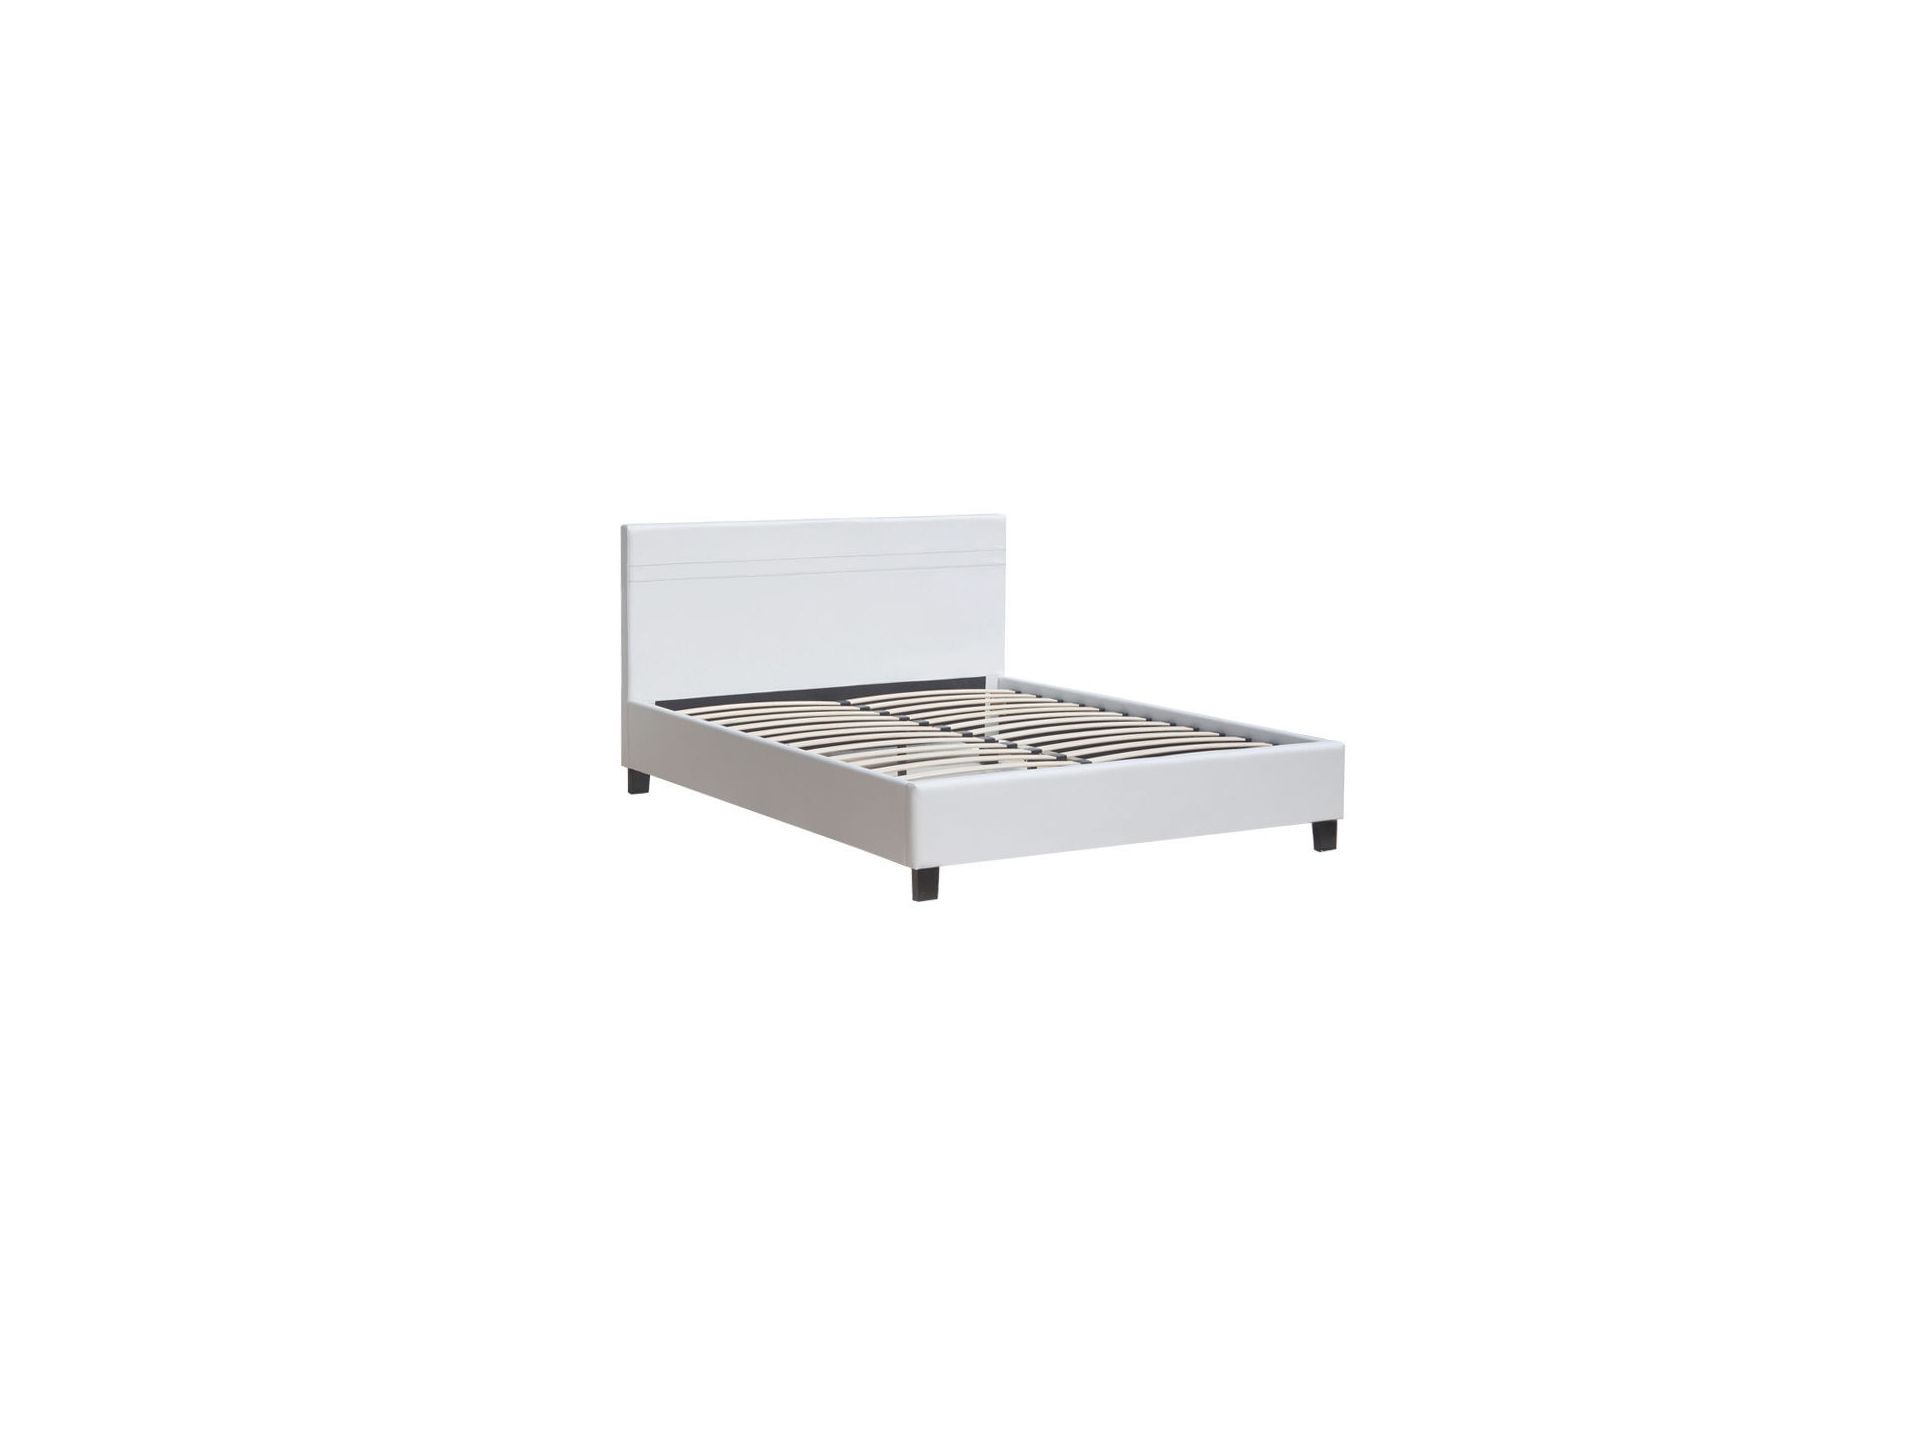 LOGAN Queen Bedroom Furniture Package - WHITE